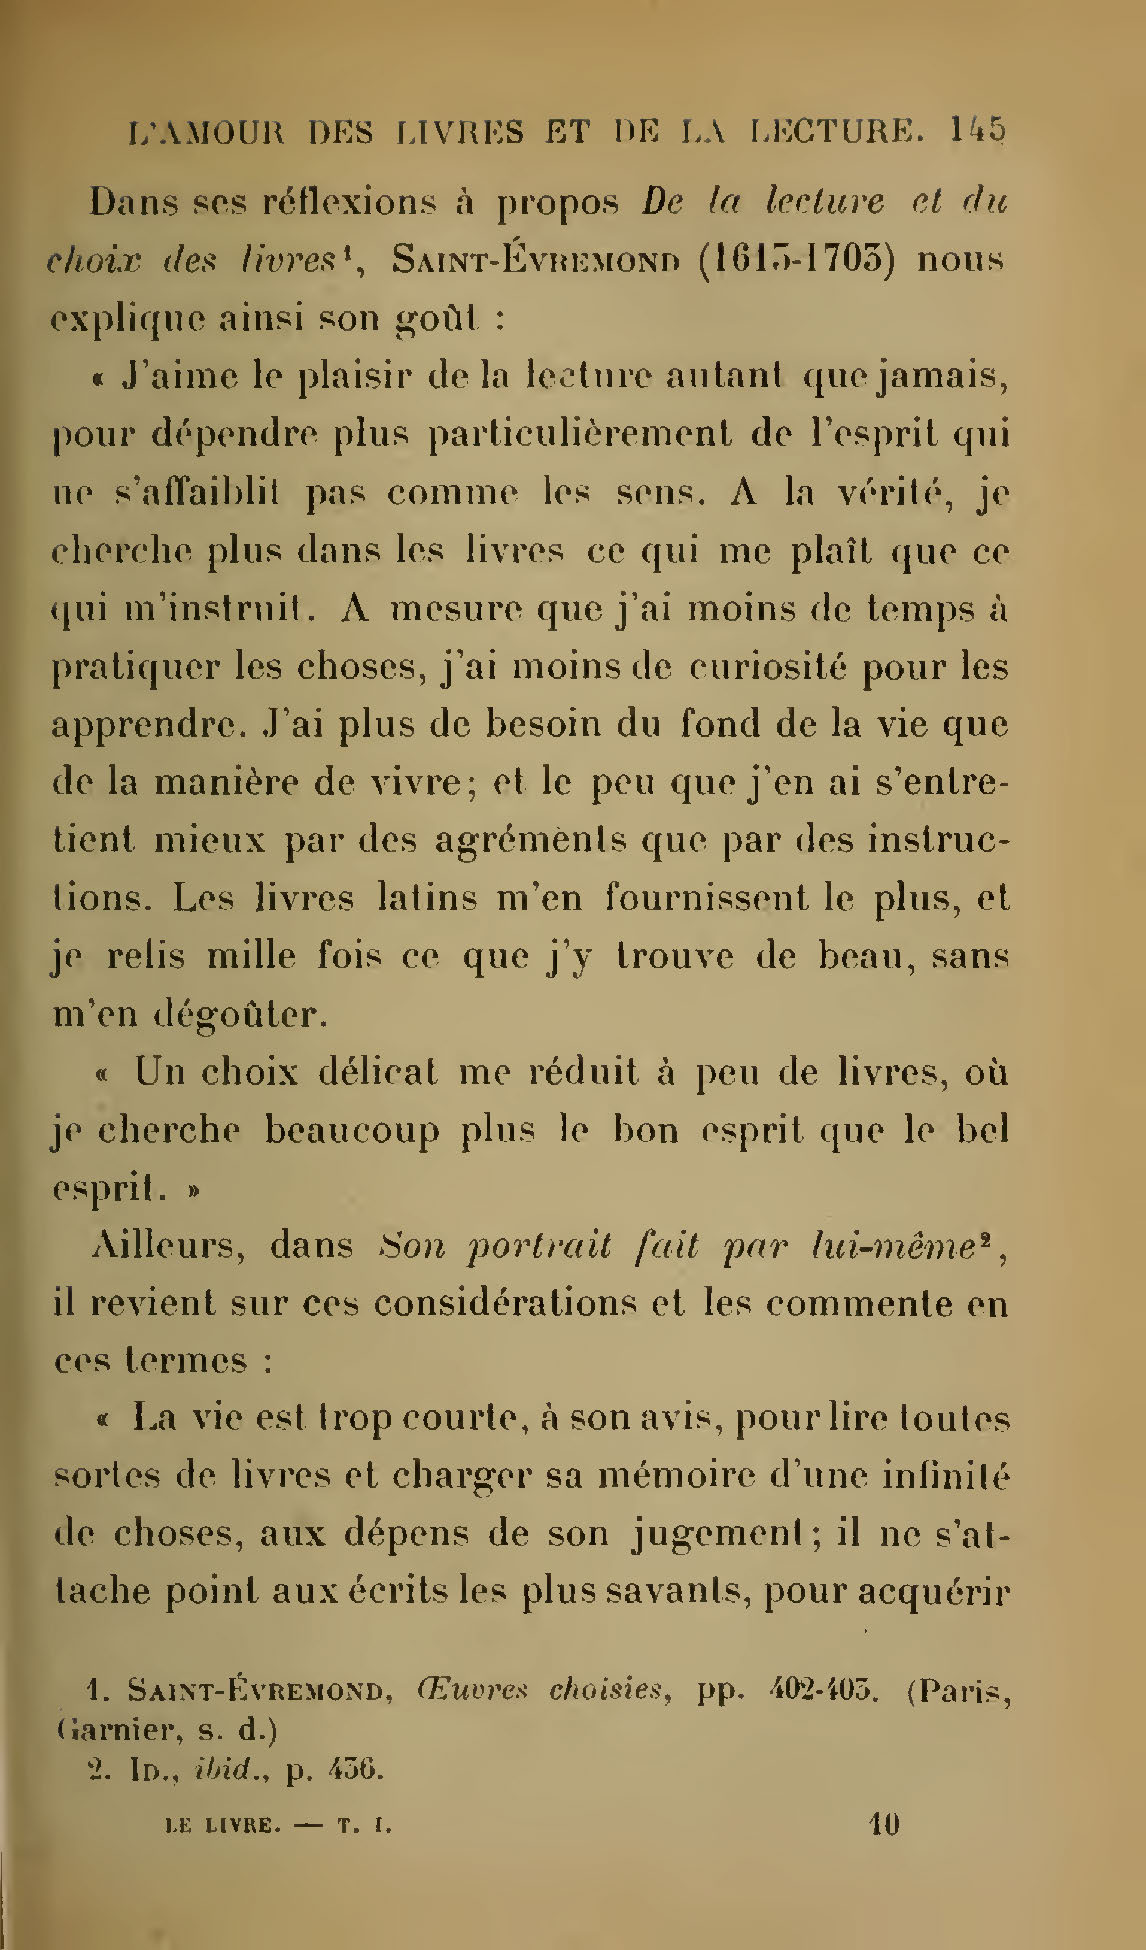 Albert Cim, Le Livre, t. I, p. 145.